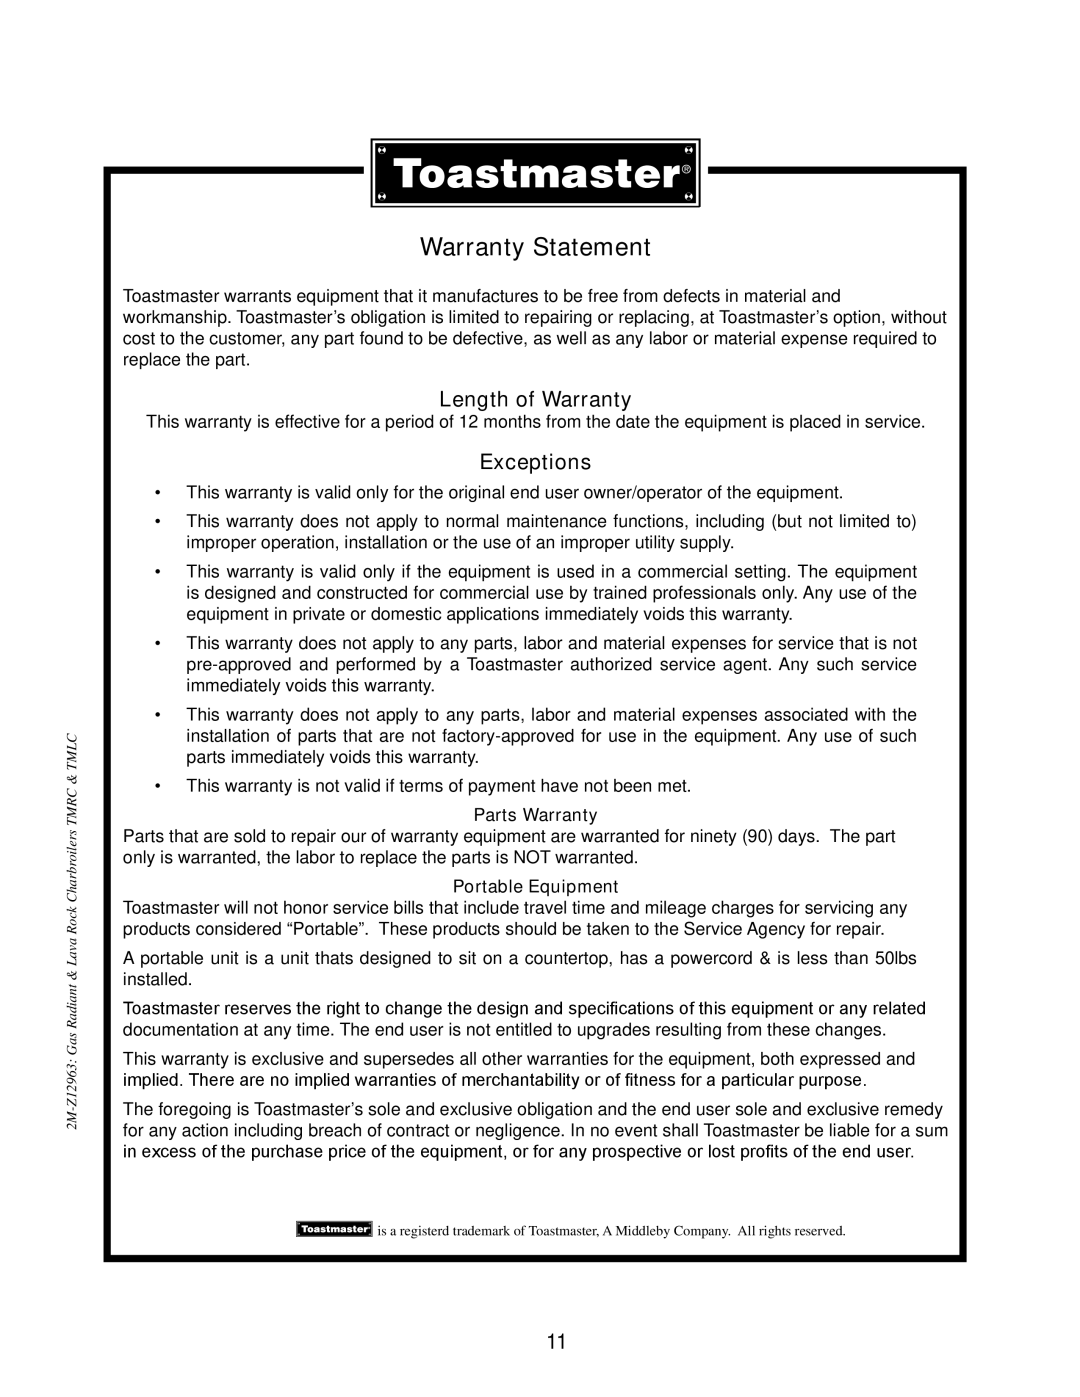 Toastmaster TMRC36, TMRC48, TMRC24 Warranty Statement, Length of Warranty, Exceptions, Parts Warranty, Portable Equipment 